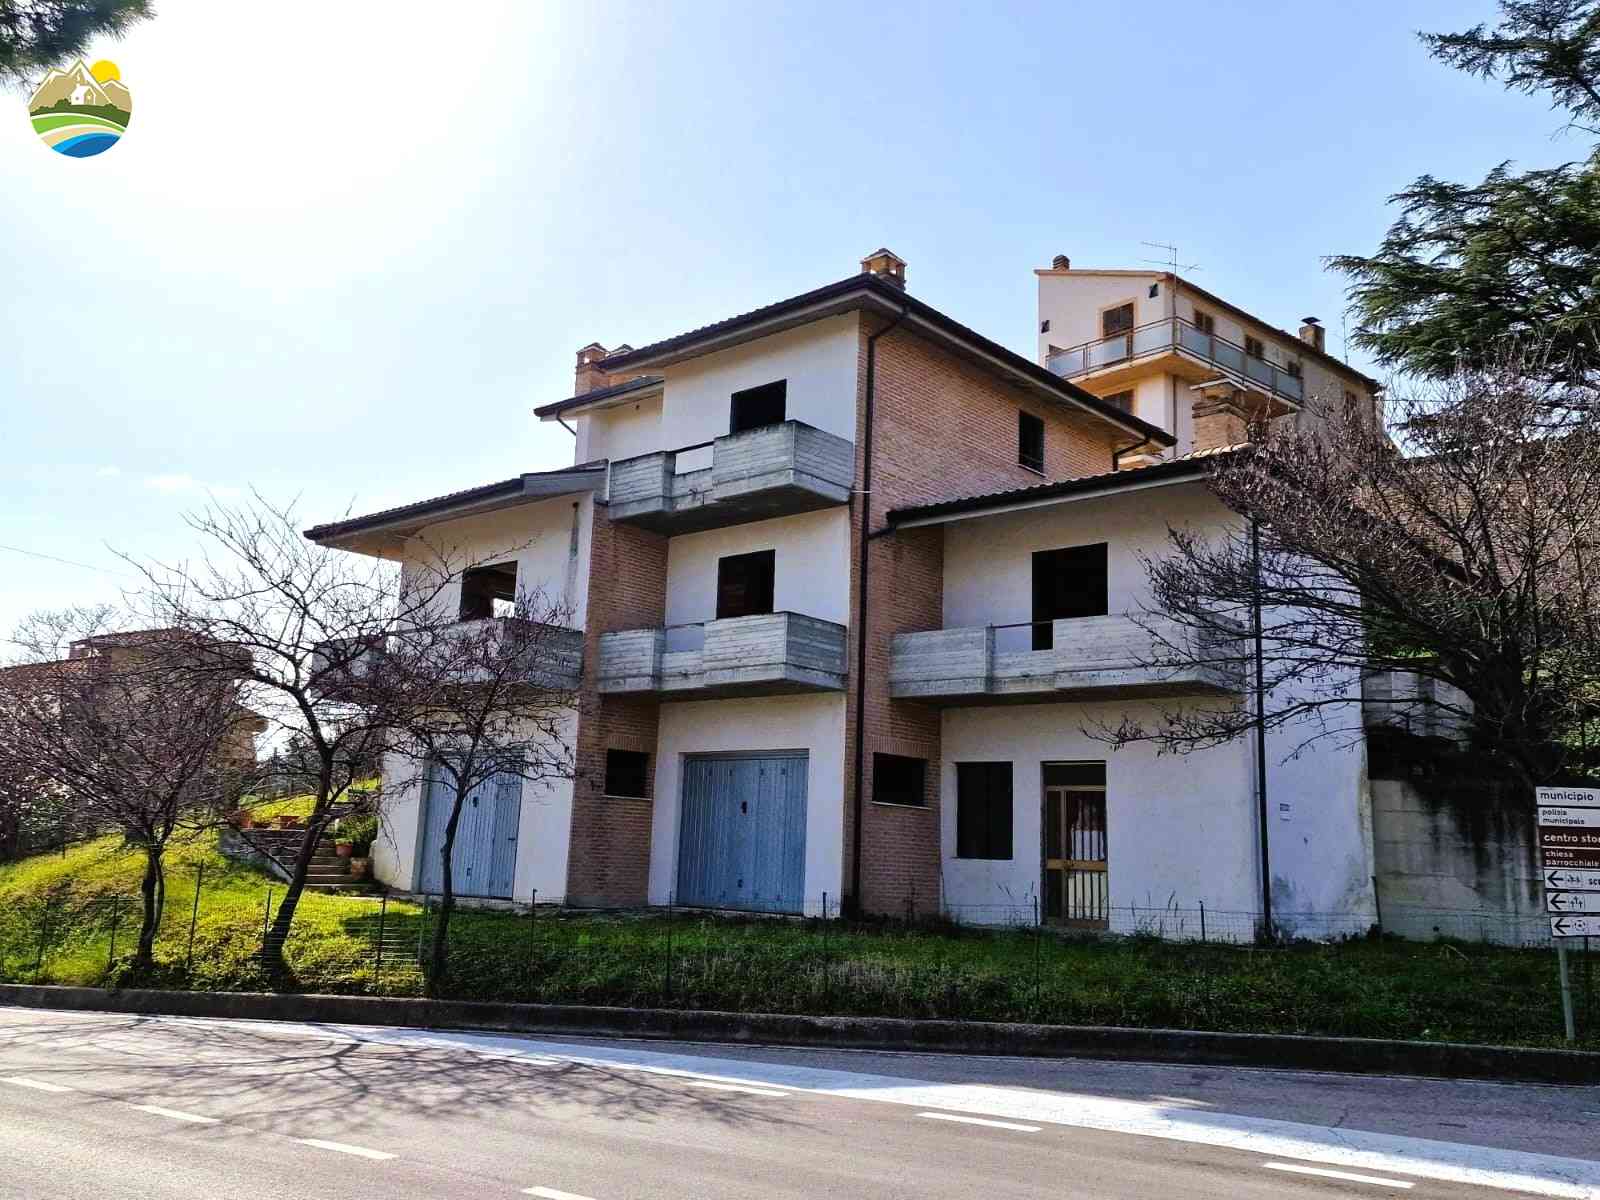 Villa Villa in vendita Castilenti (TE), Villa Mandorlo - Castilenti - EUR 129.450 10